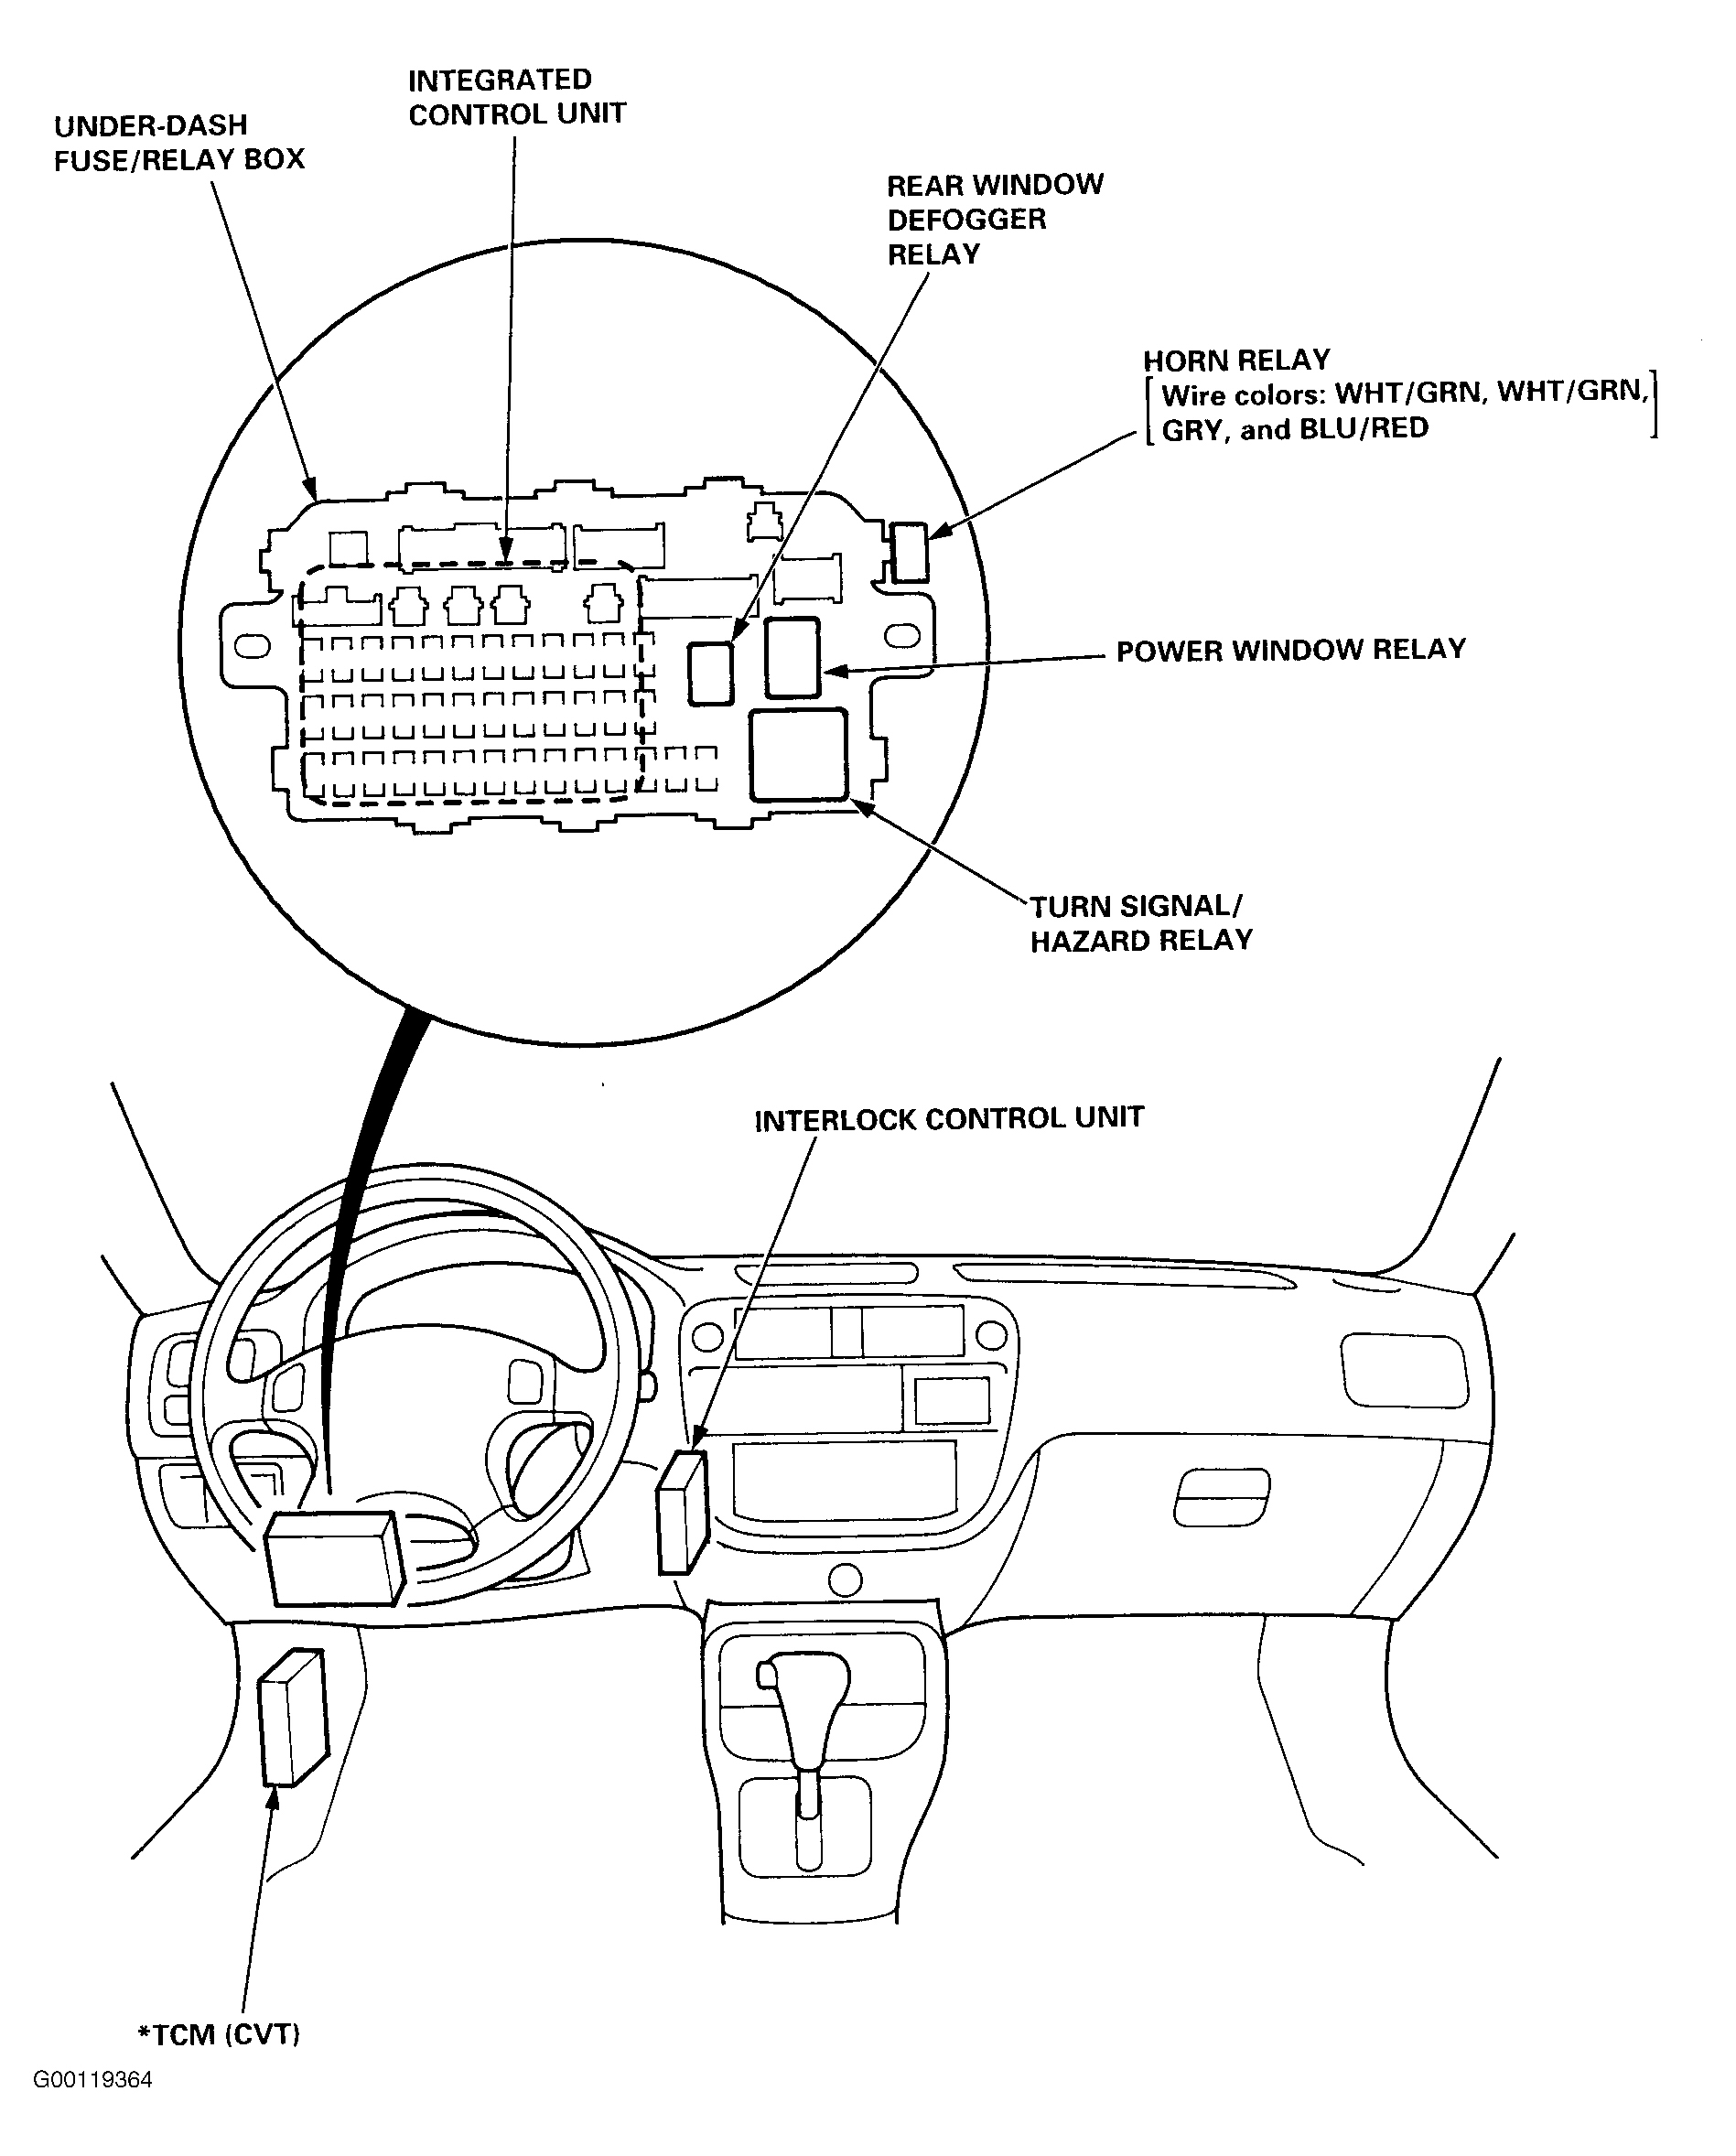 Honda Civic CX 1998 - Component Locations -  Locating Under-Dash Fuse/Relay Box (1996-97)